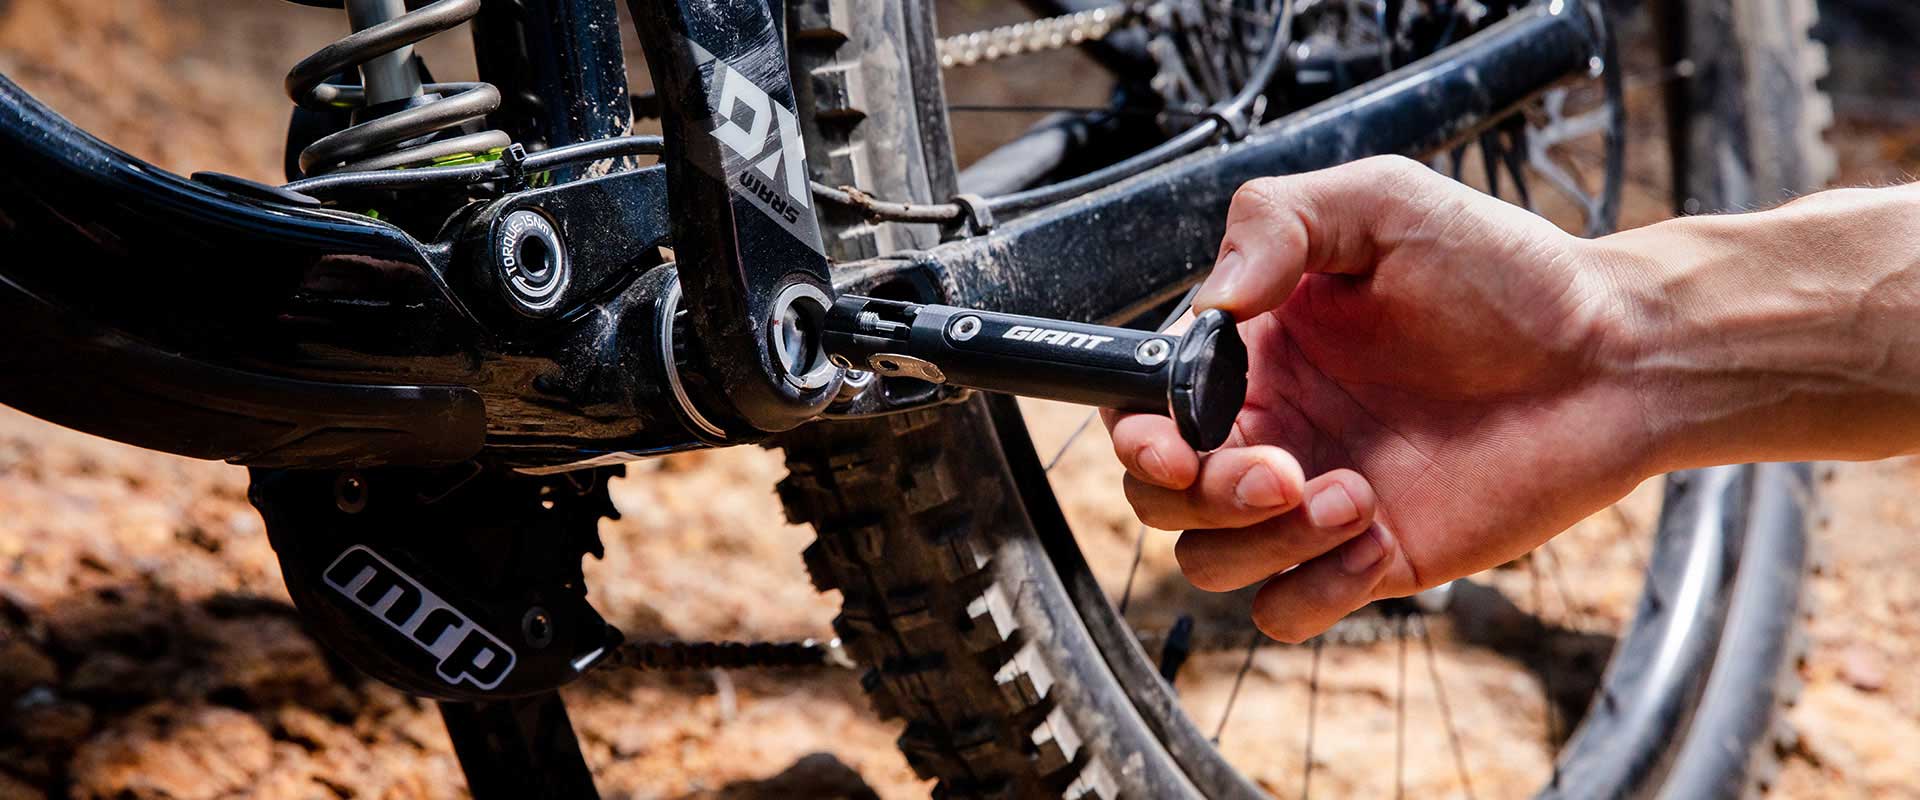 Bike Rrepair Tool Kit Mountain Bike Accessories for Men 16 in 1 Bicycle 